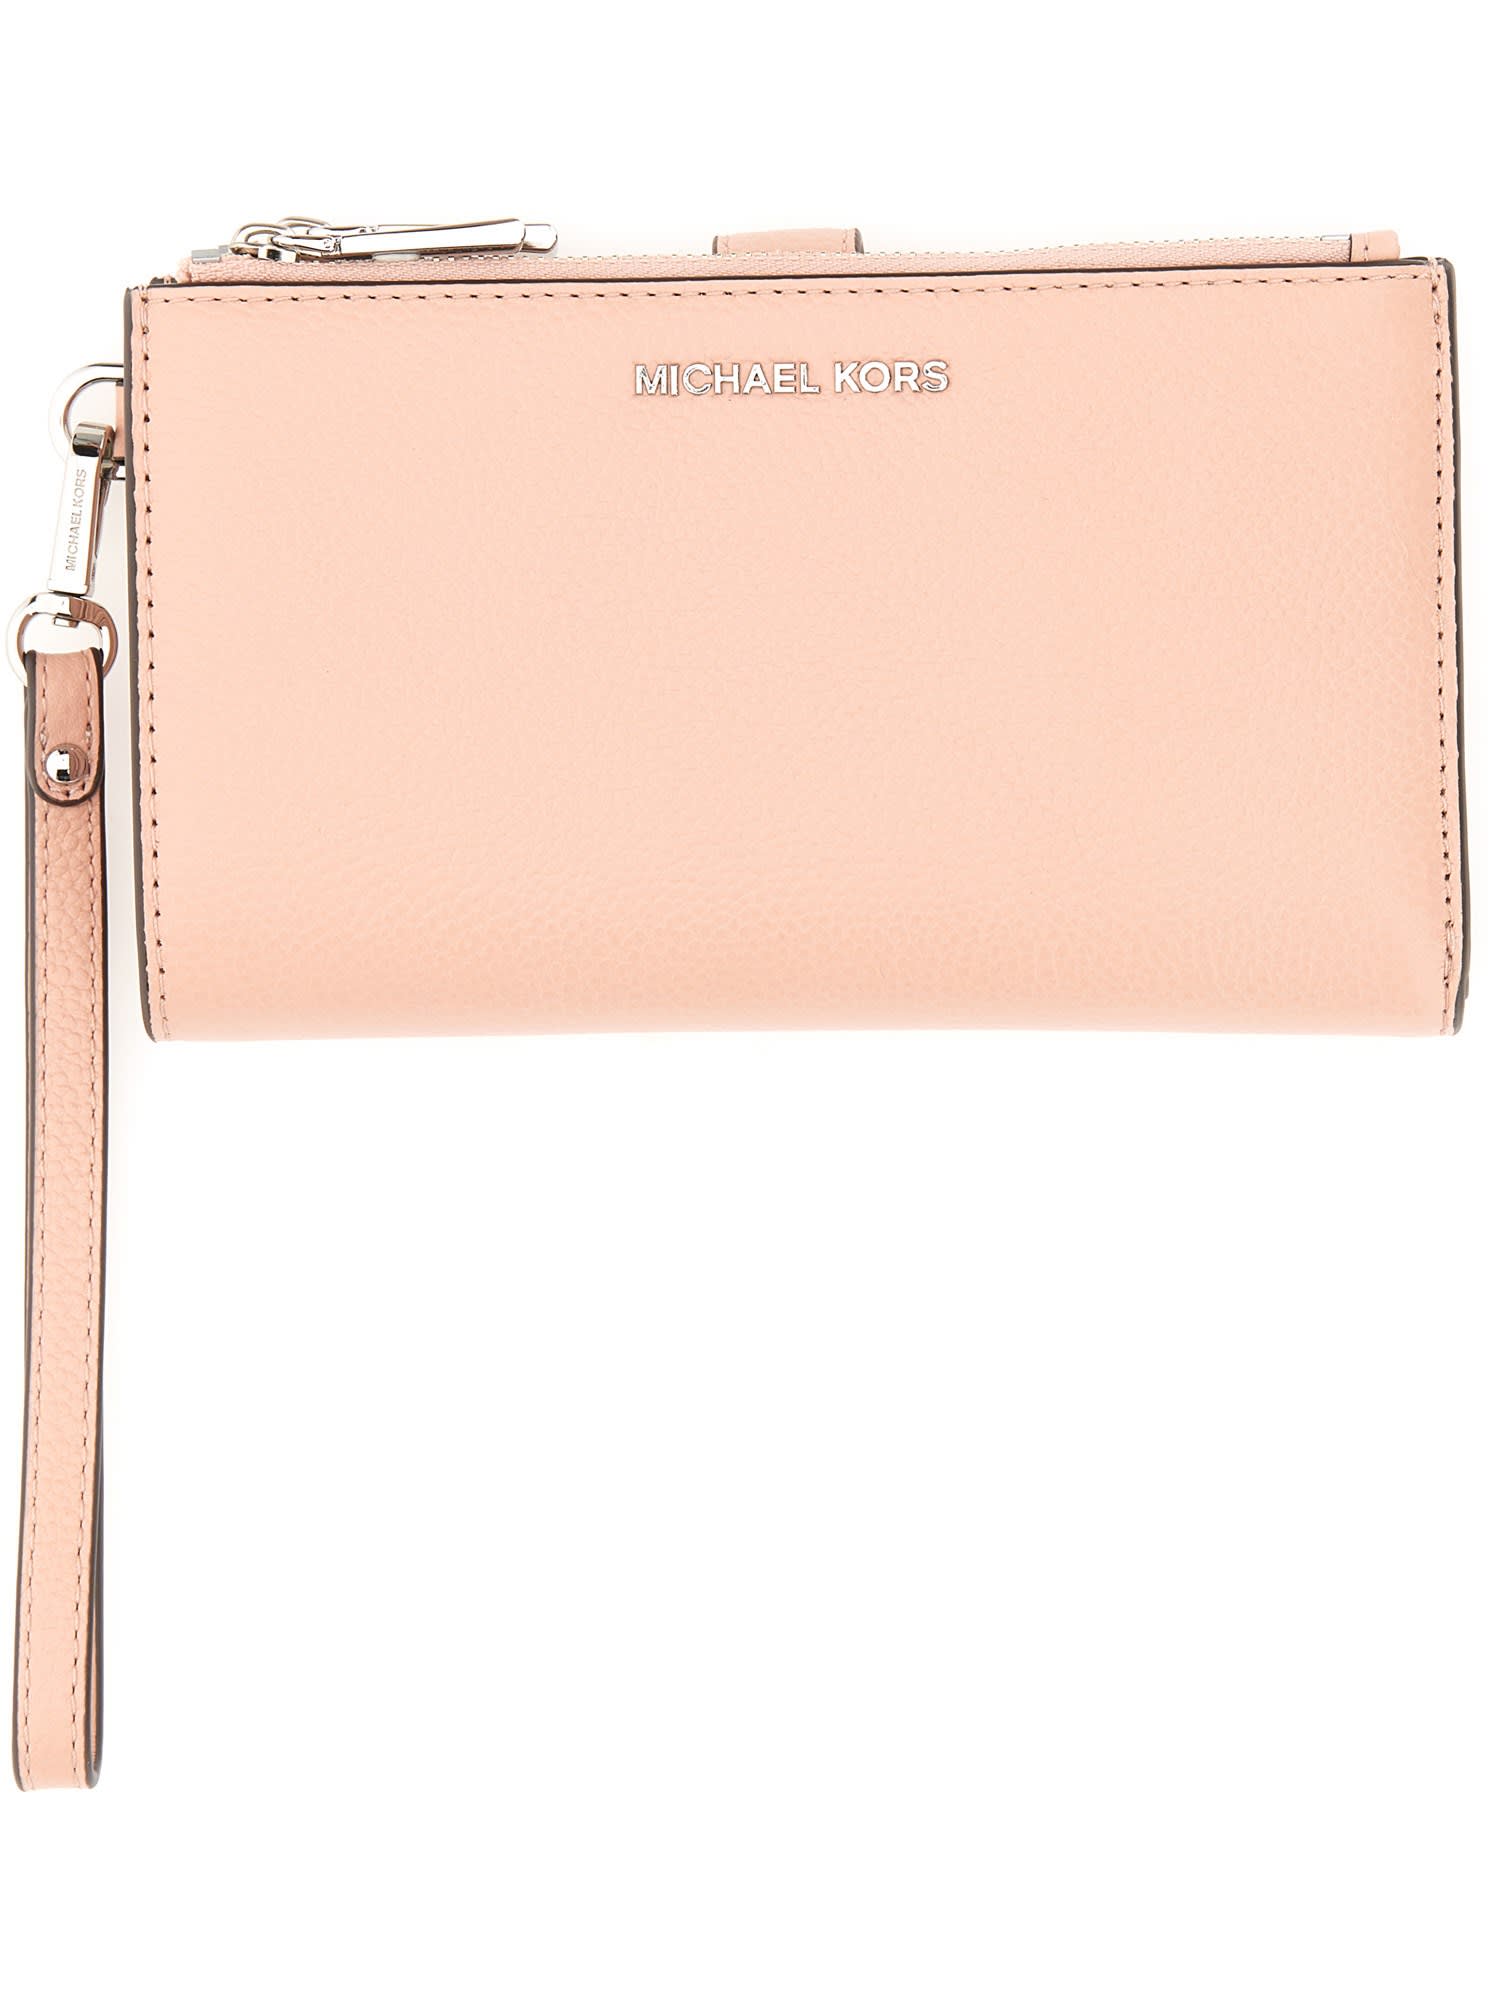 Michael Kors Pink Leather Studded Zip Around Wallet Michael Kors  TLC